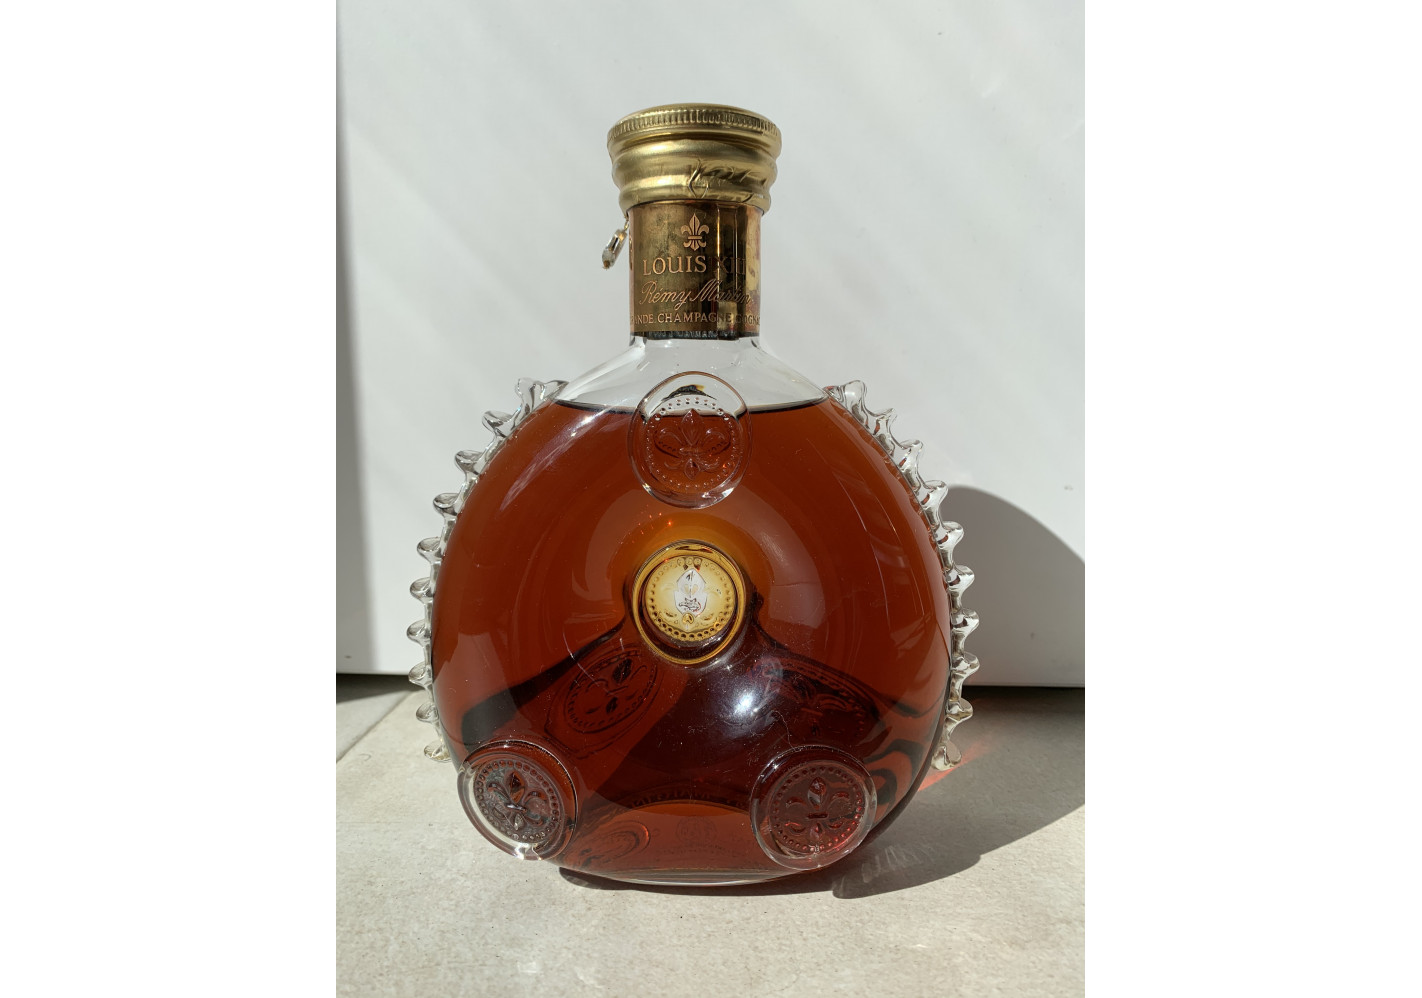 Buy Louis XIII de Remy Martin Grande Champagne Cognac 700ml